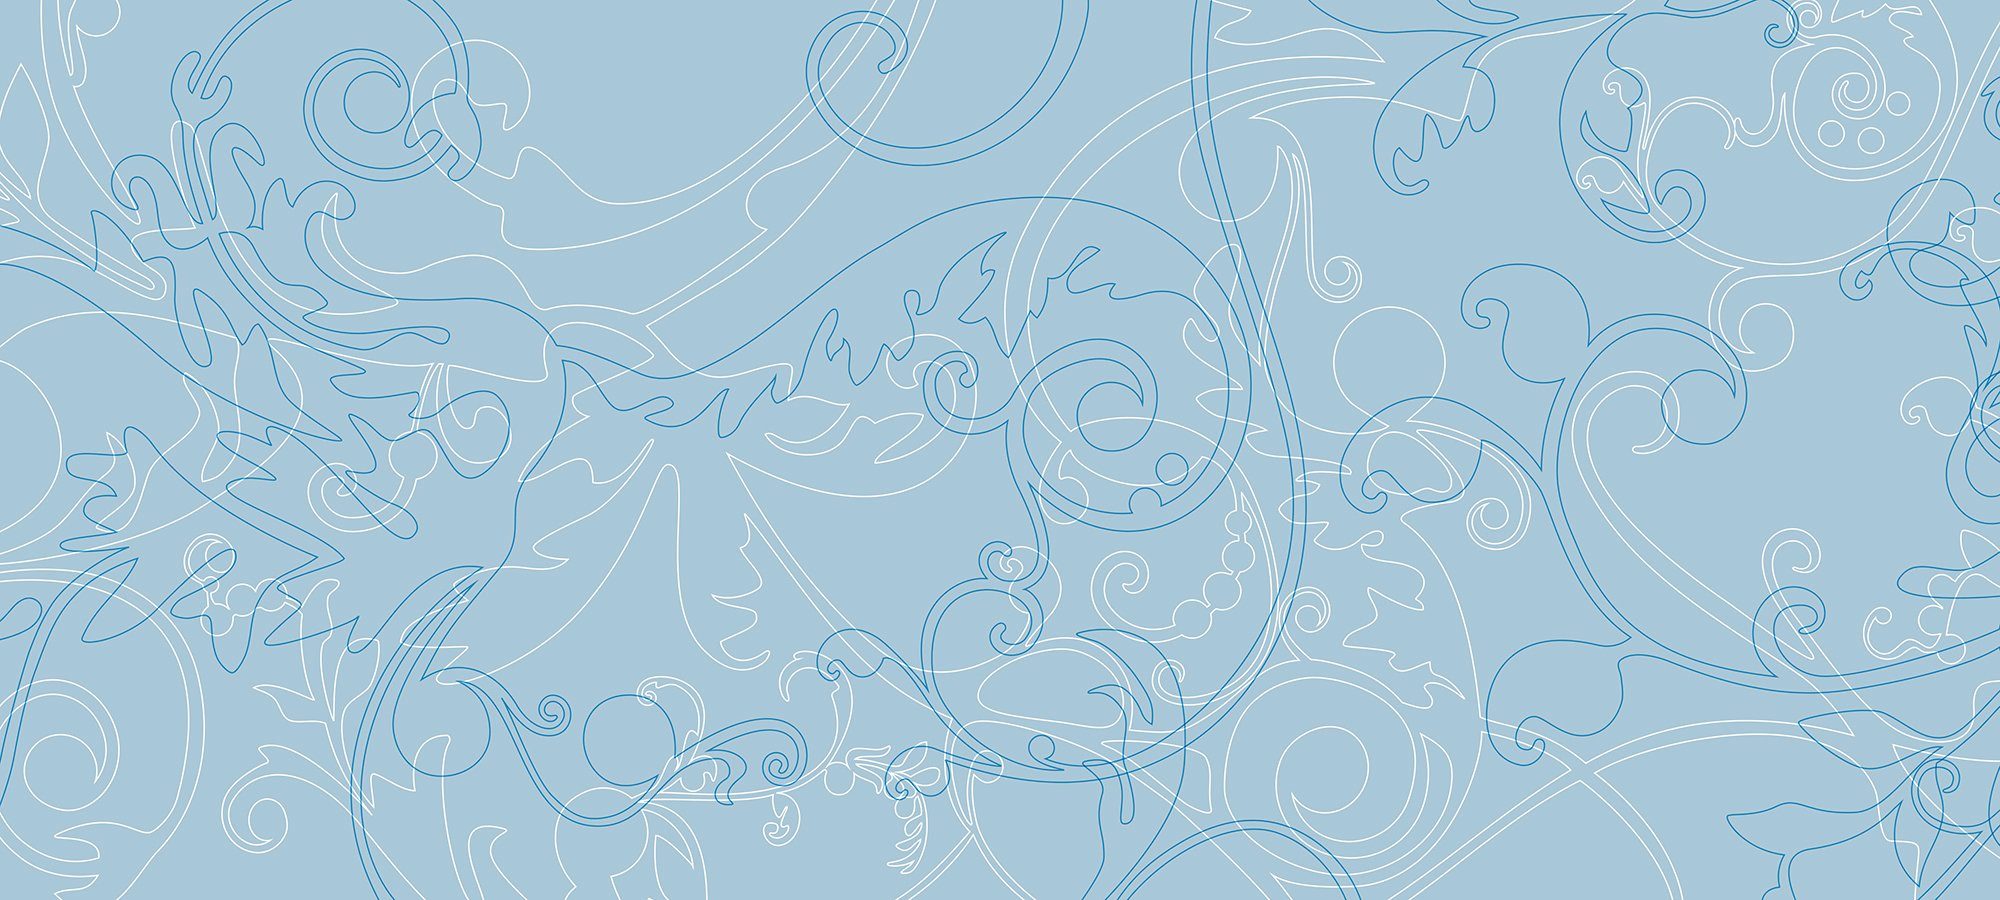 4, Paper Fototapete Decke 47 Architects Art Wand, glatt, dunkelblau/himmelblau/weiß Ornament (6 St), Vlies, Schräge, Barock, Atelier